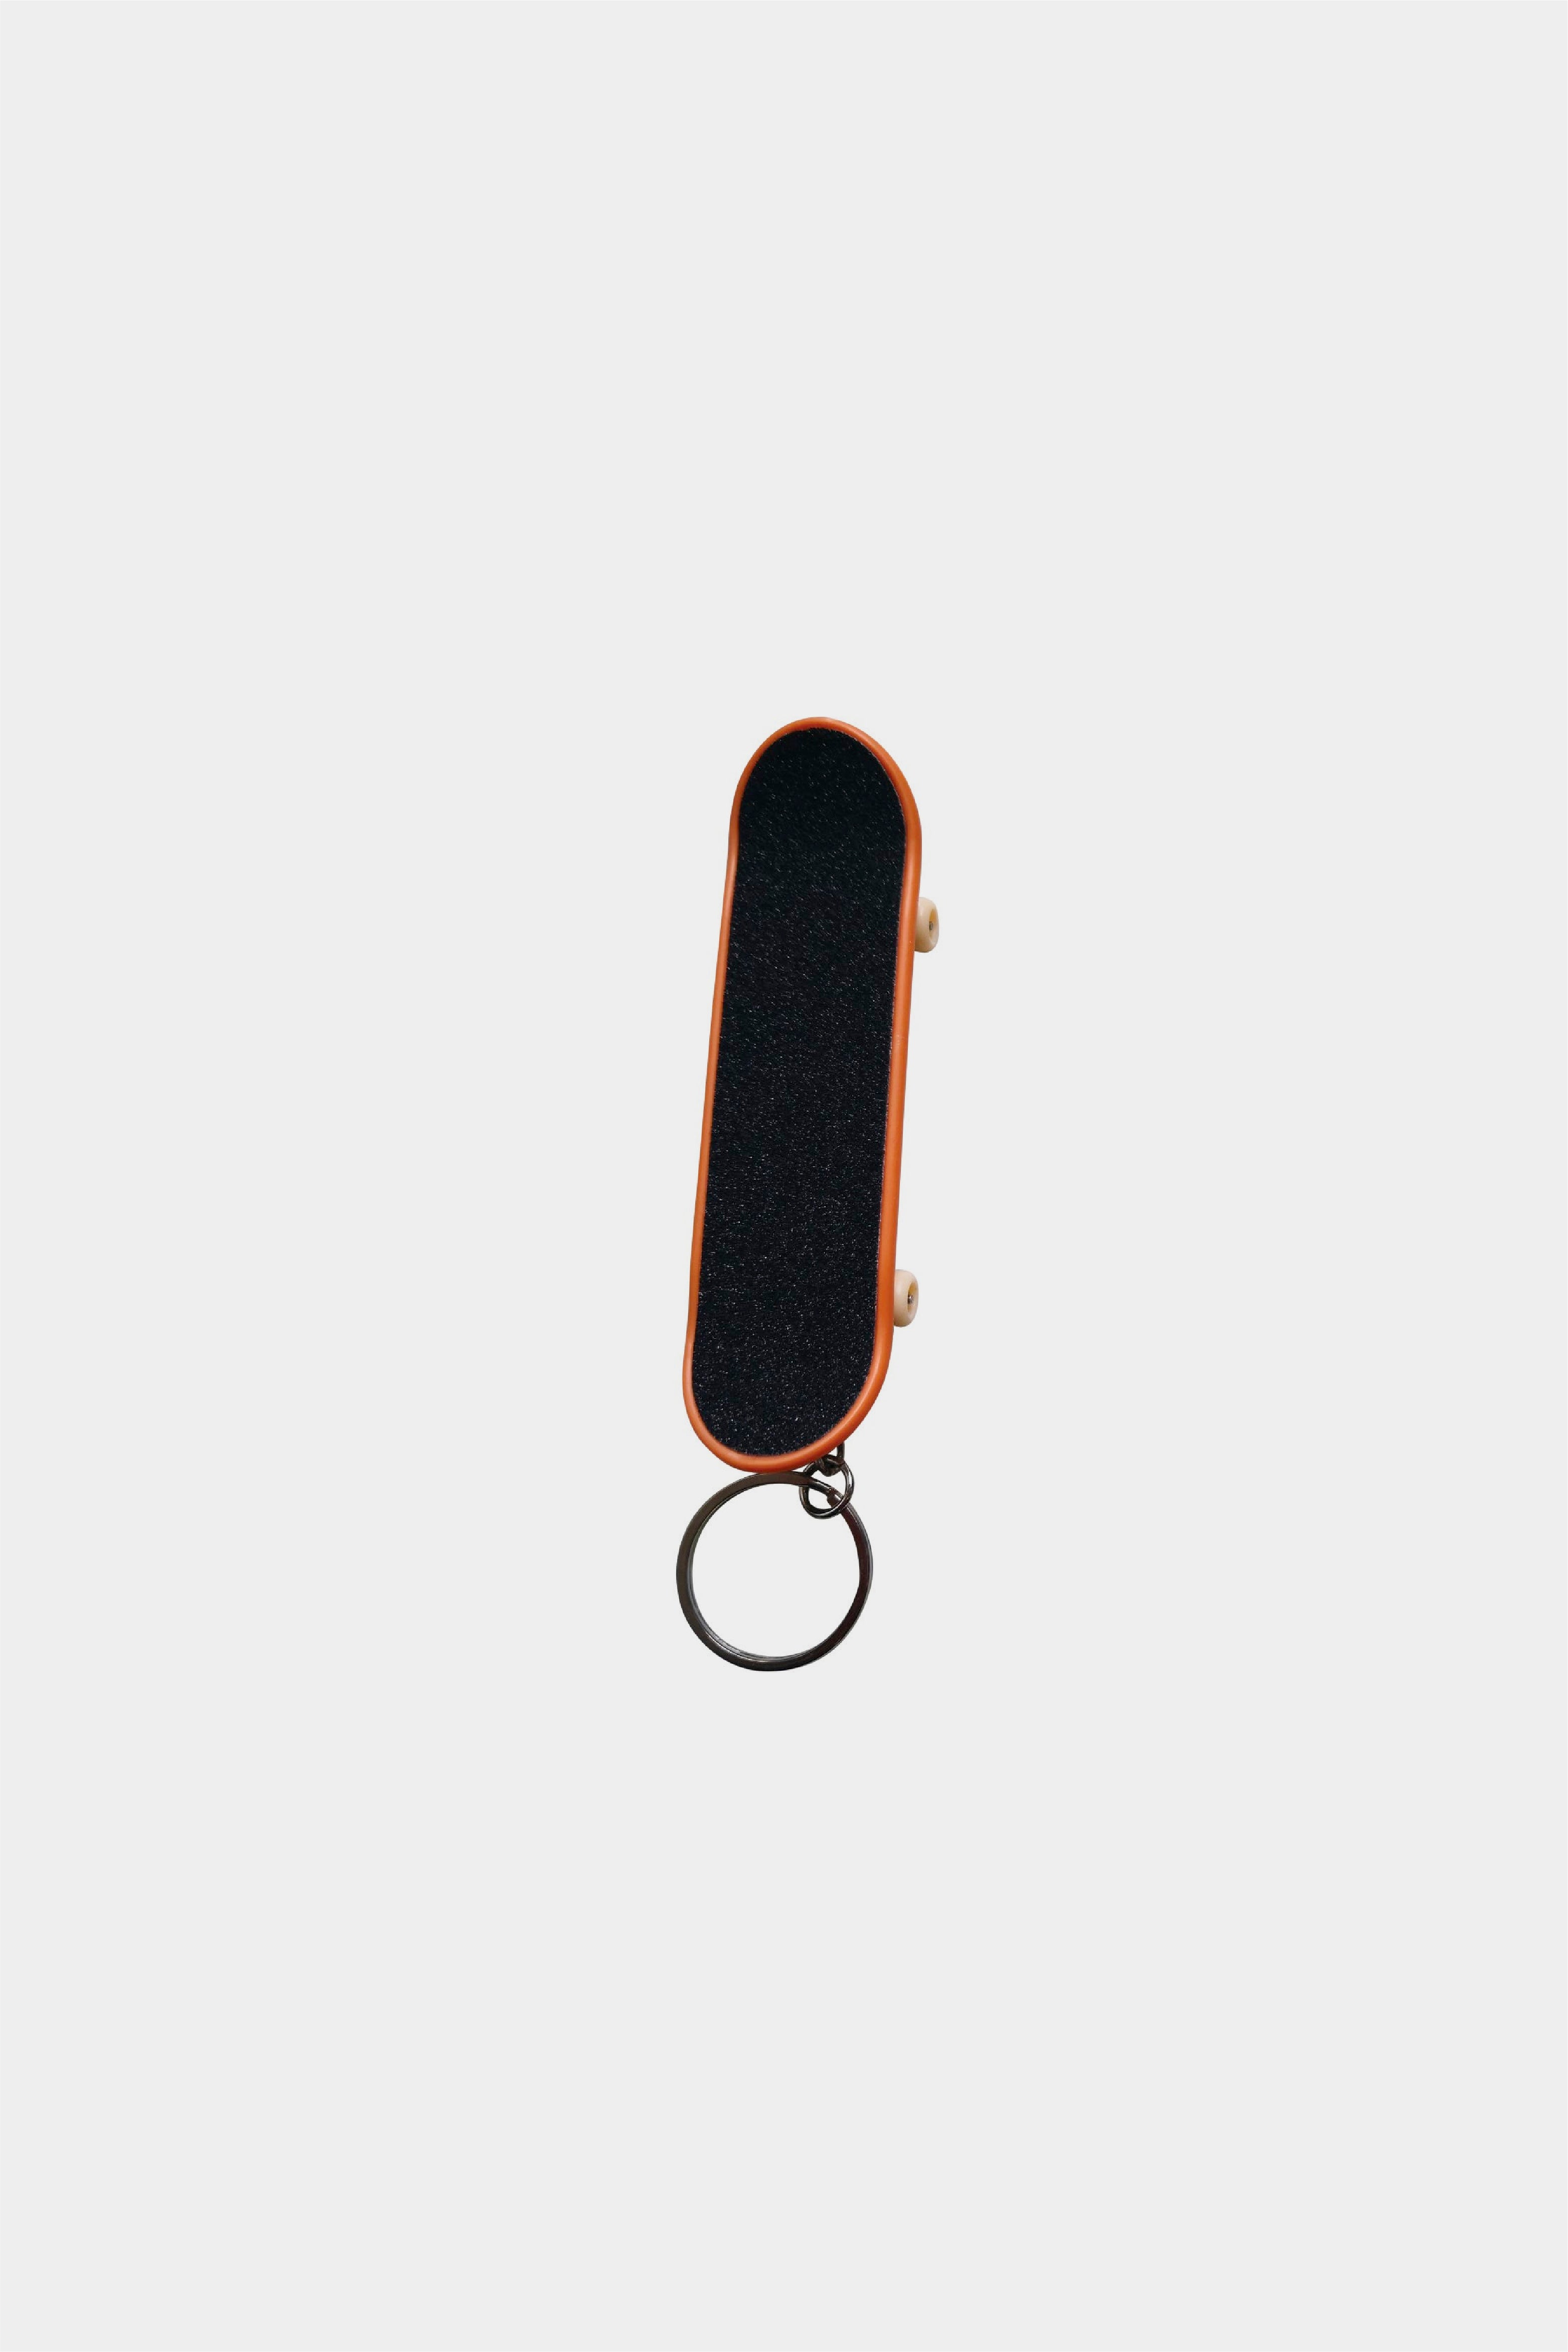 Selectshop FRAME - SANTA CRUZ Slasher Key Chain All-Accessories Concept Store Dubai